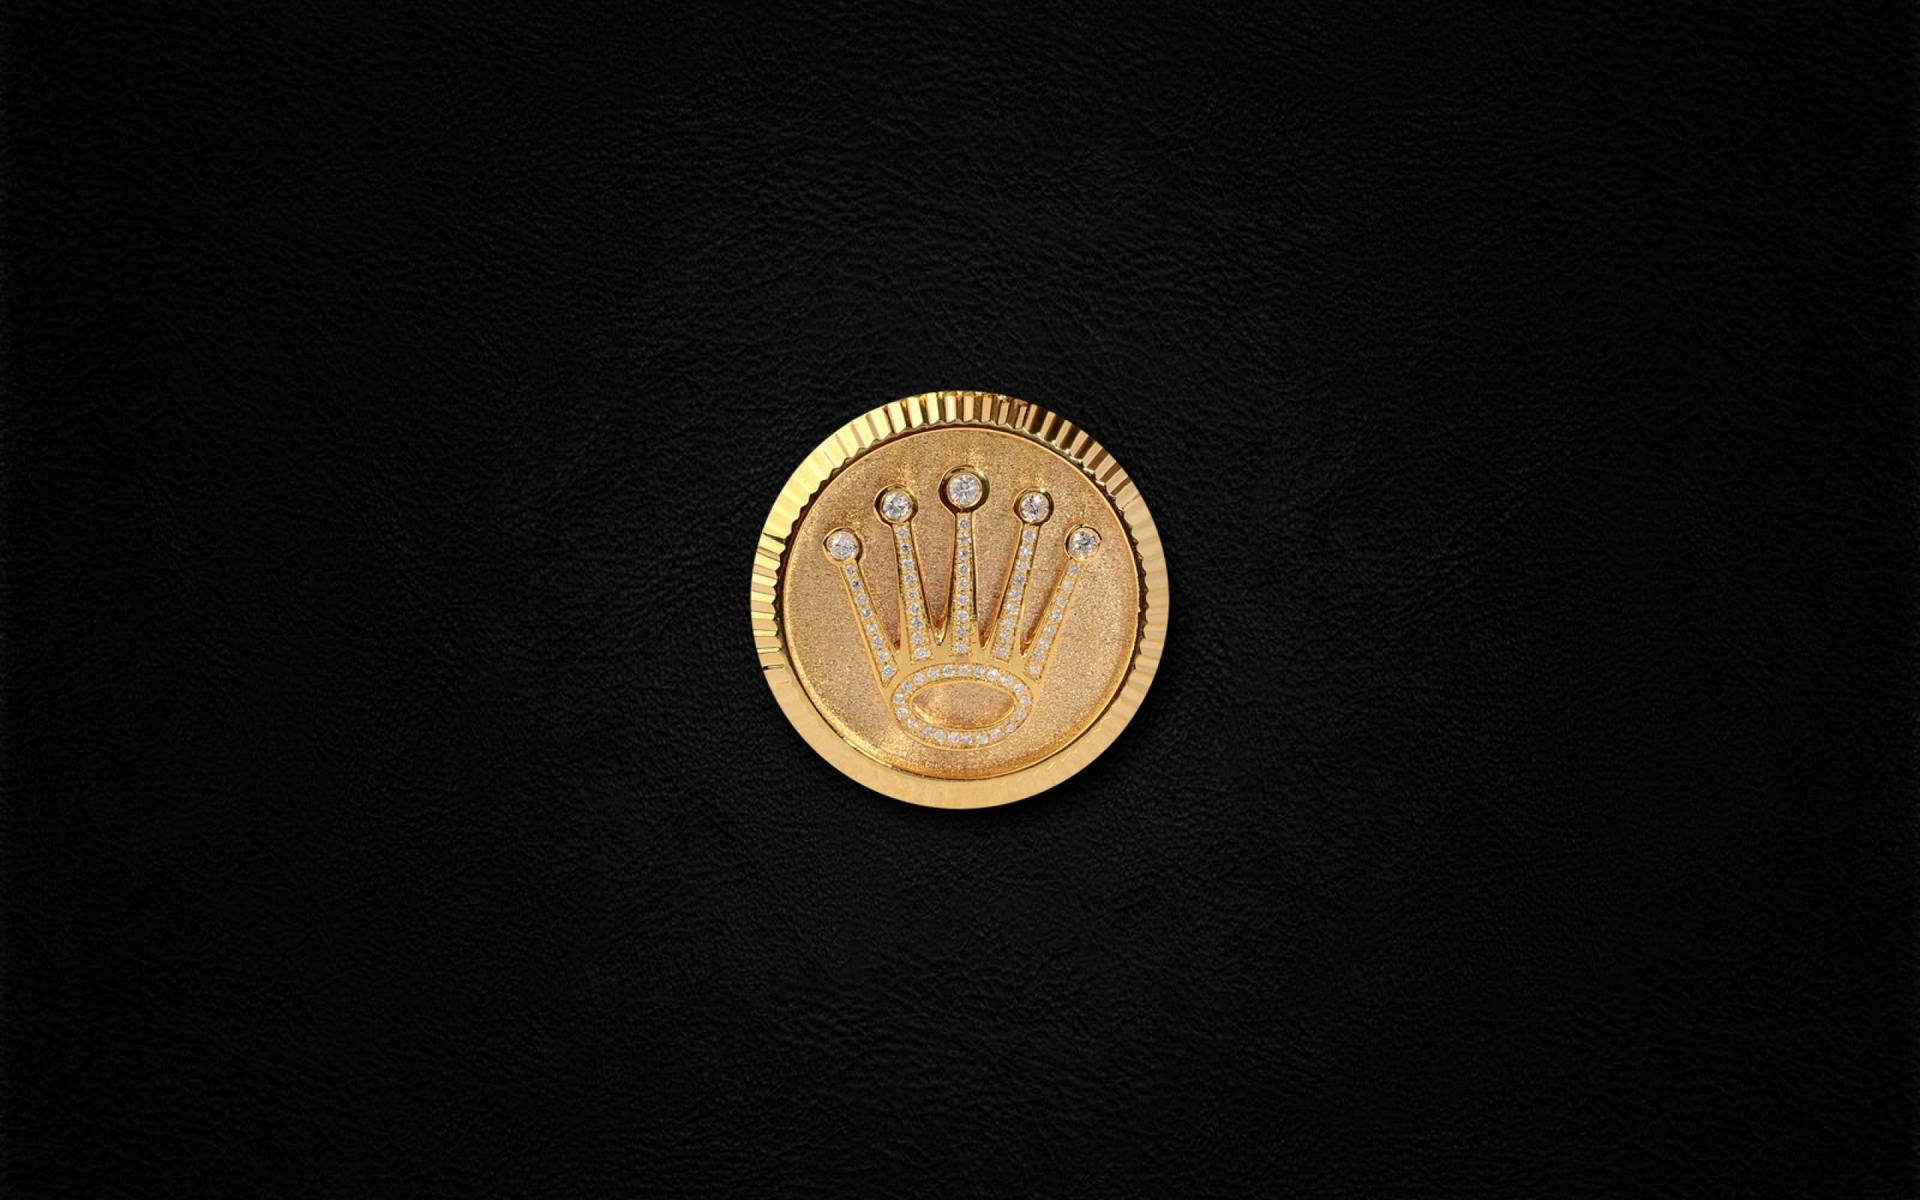 Rolex Logo Crown On A Coin